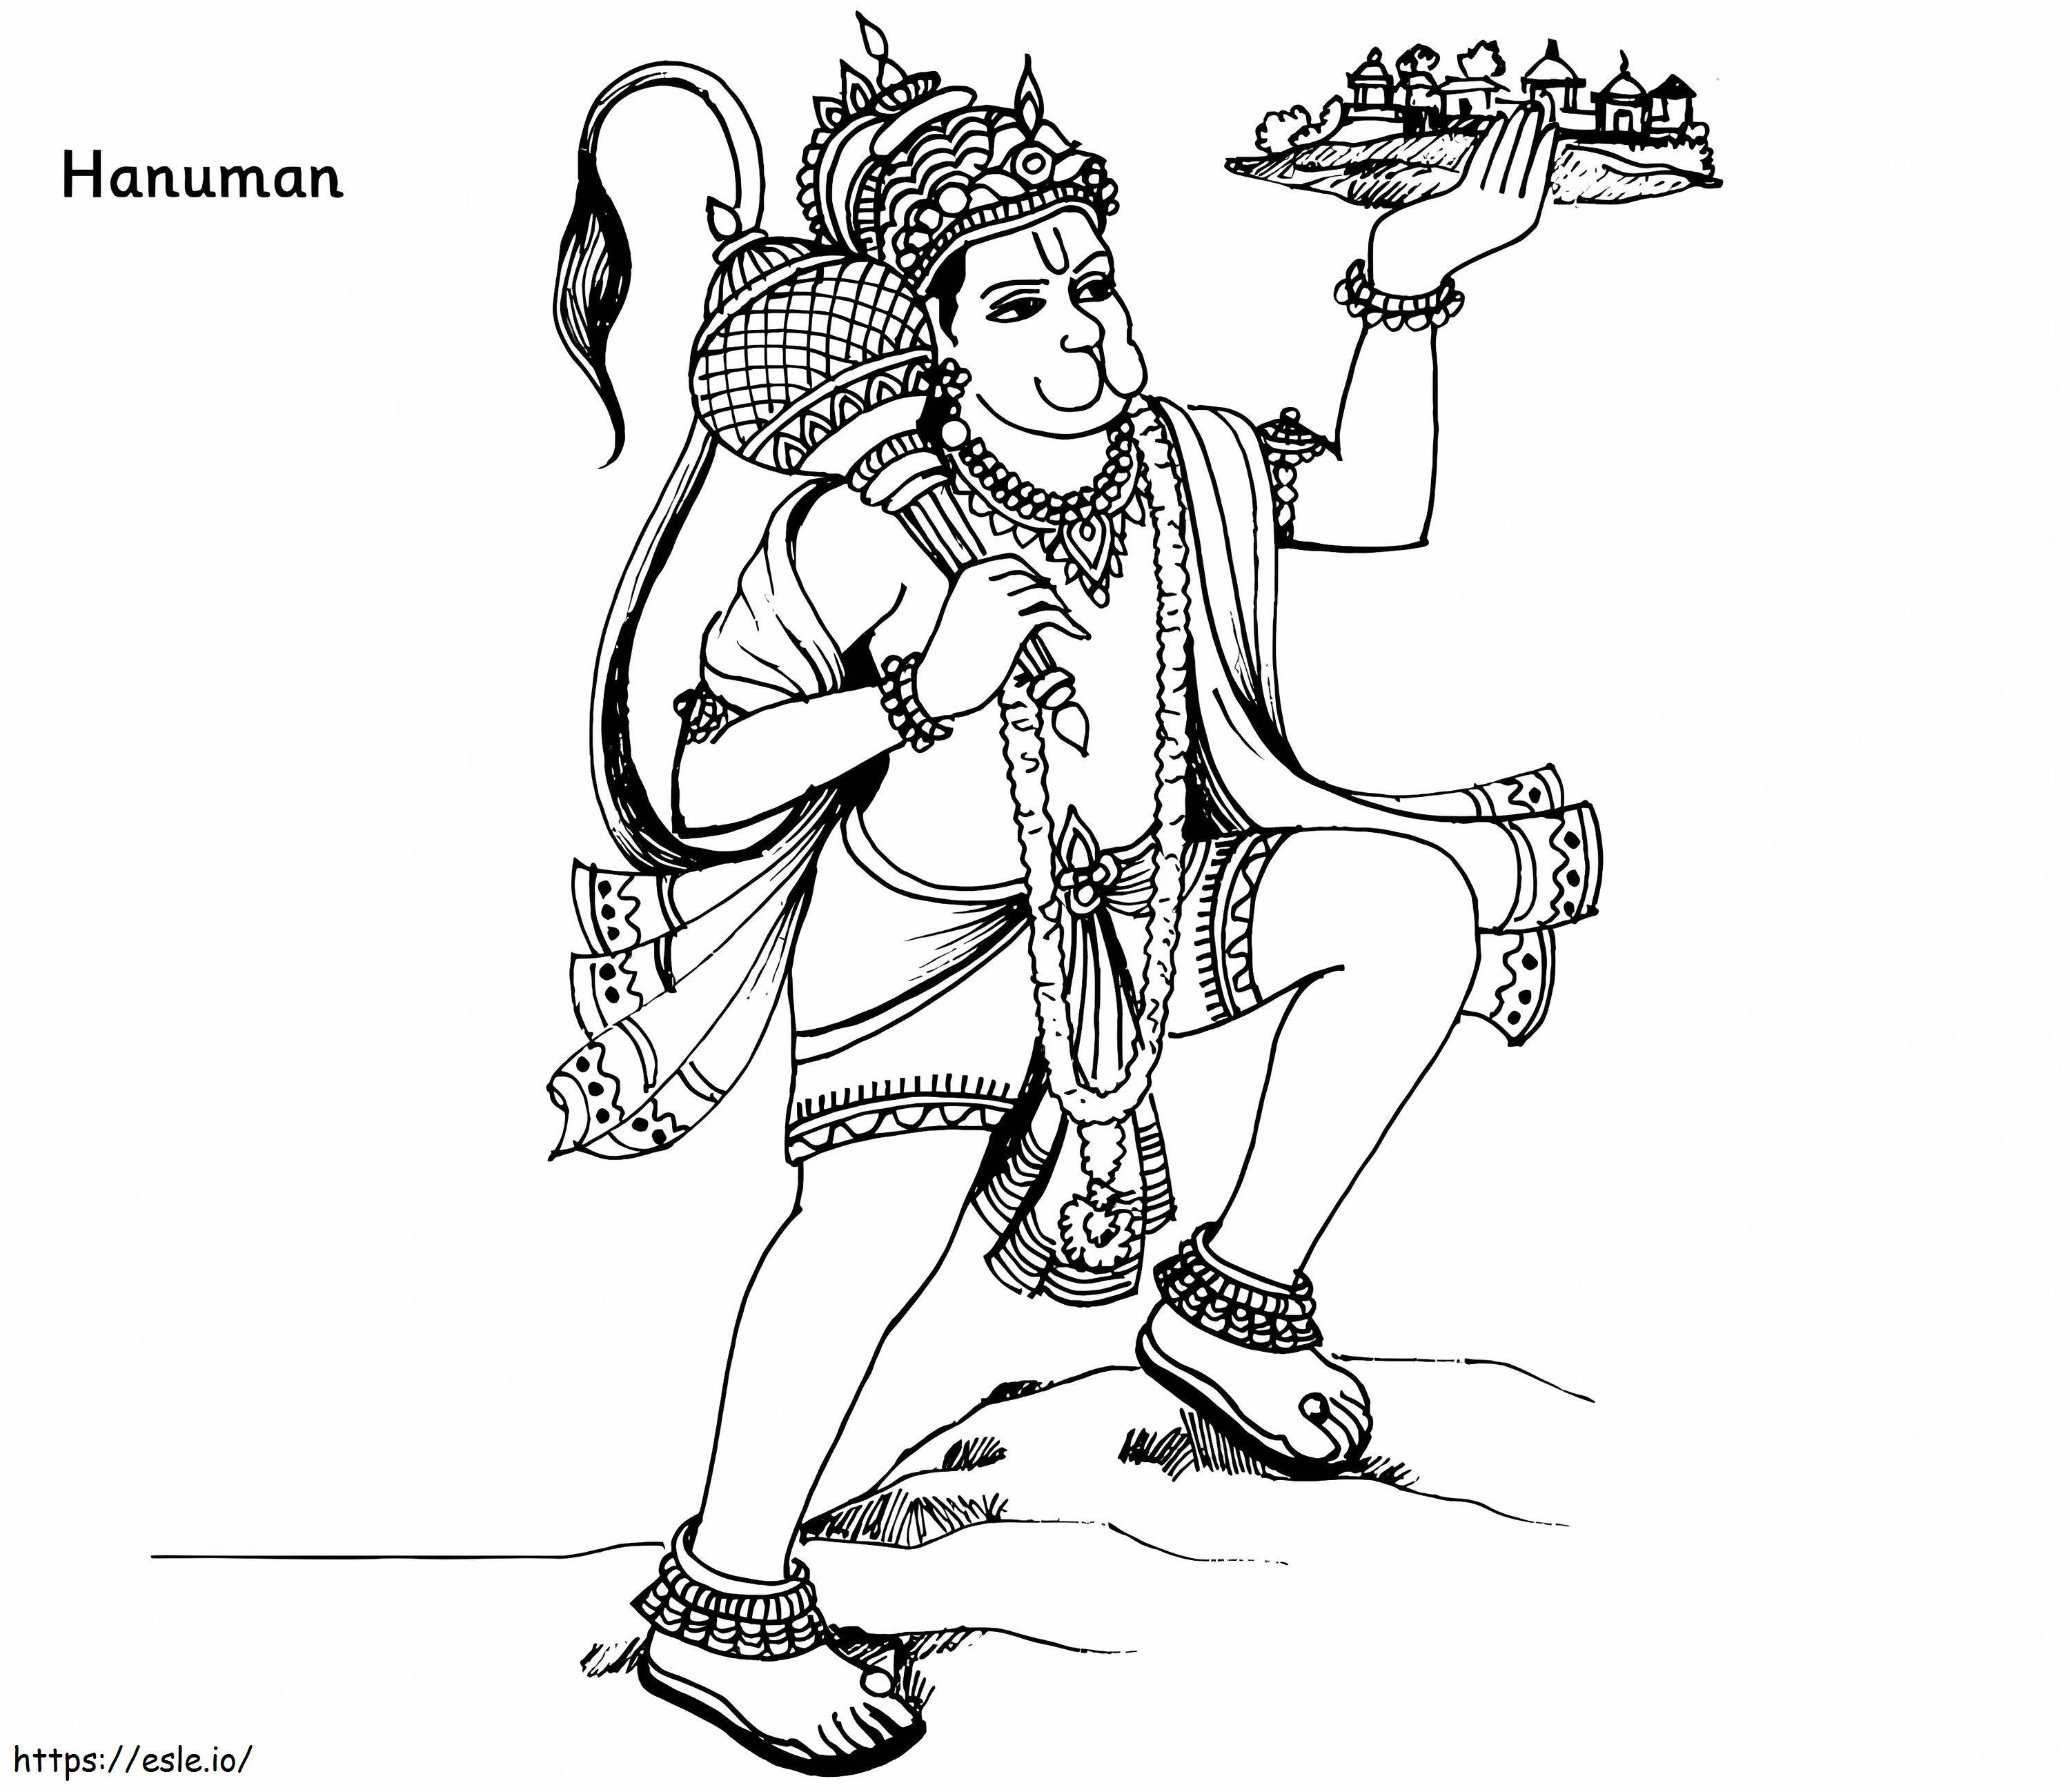 Hanuman ausmalbilder